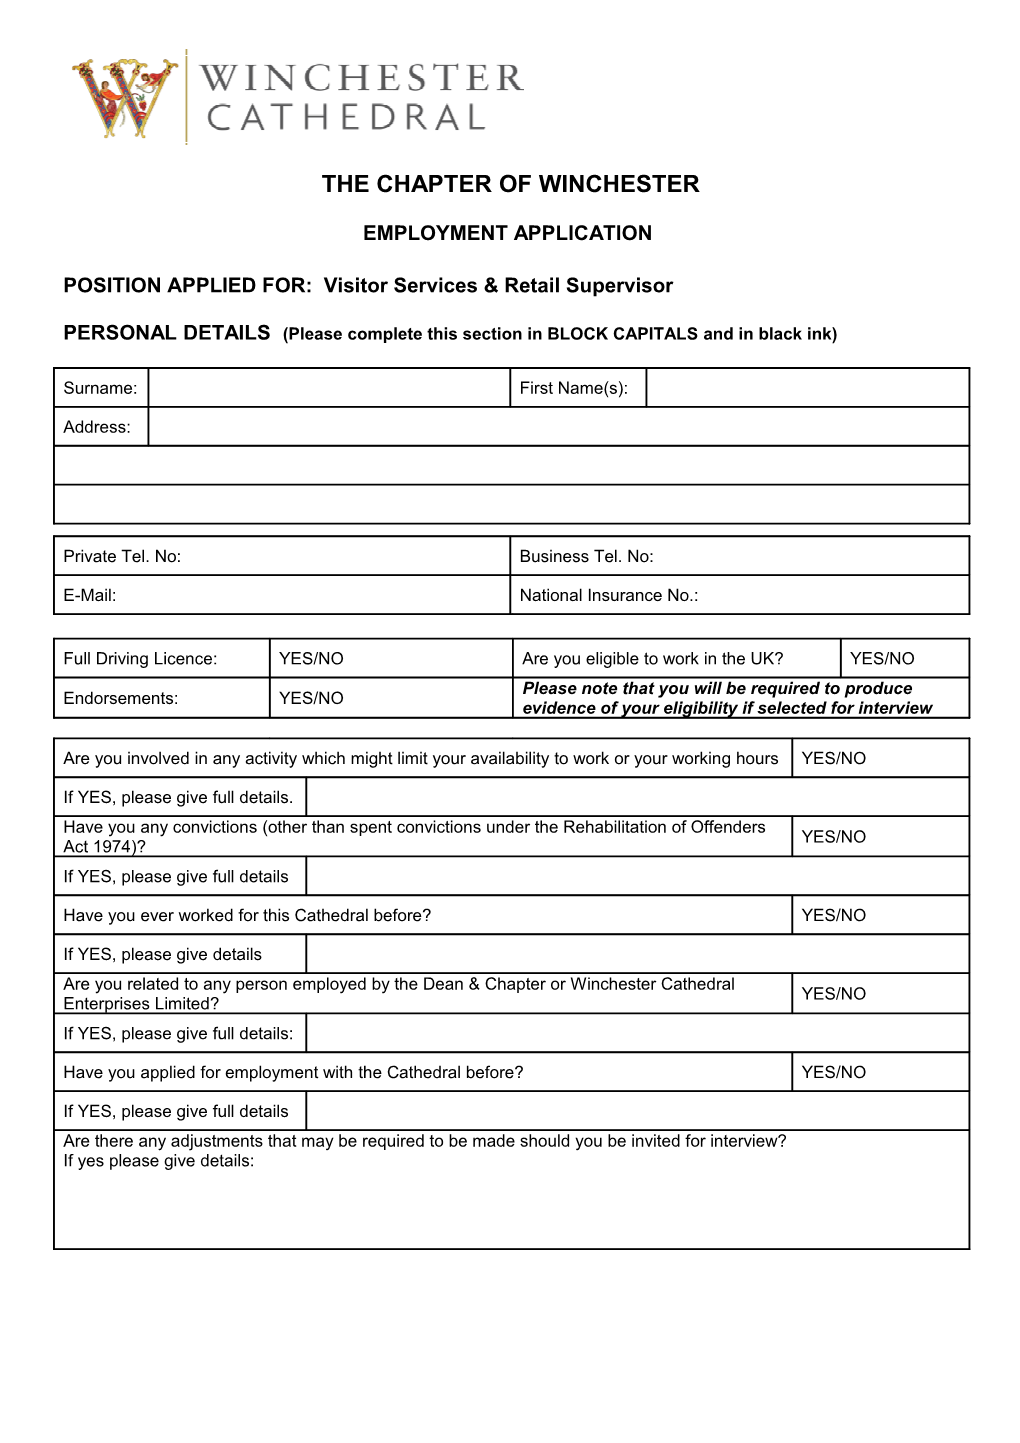 Employment Application Form s4